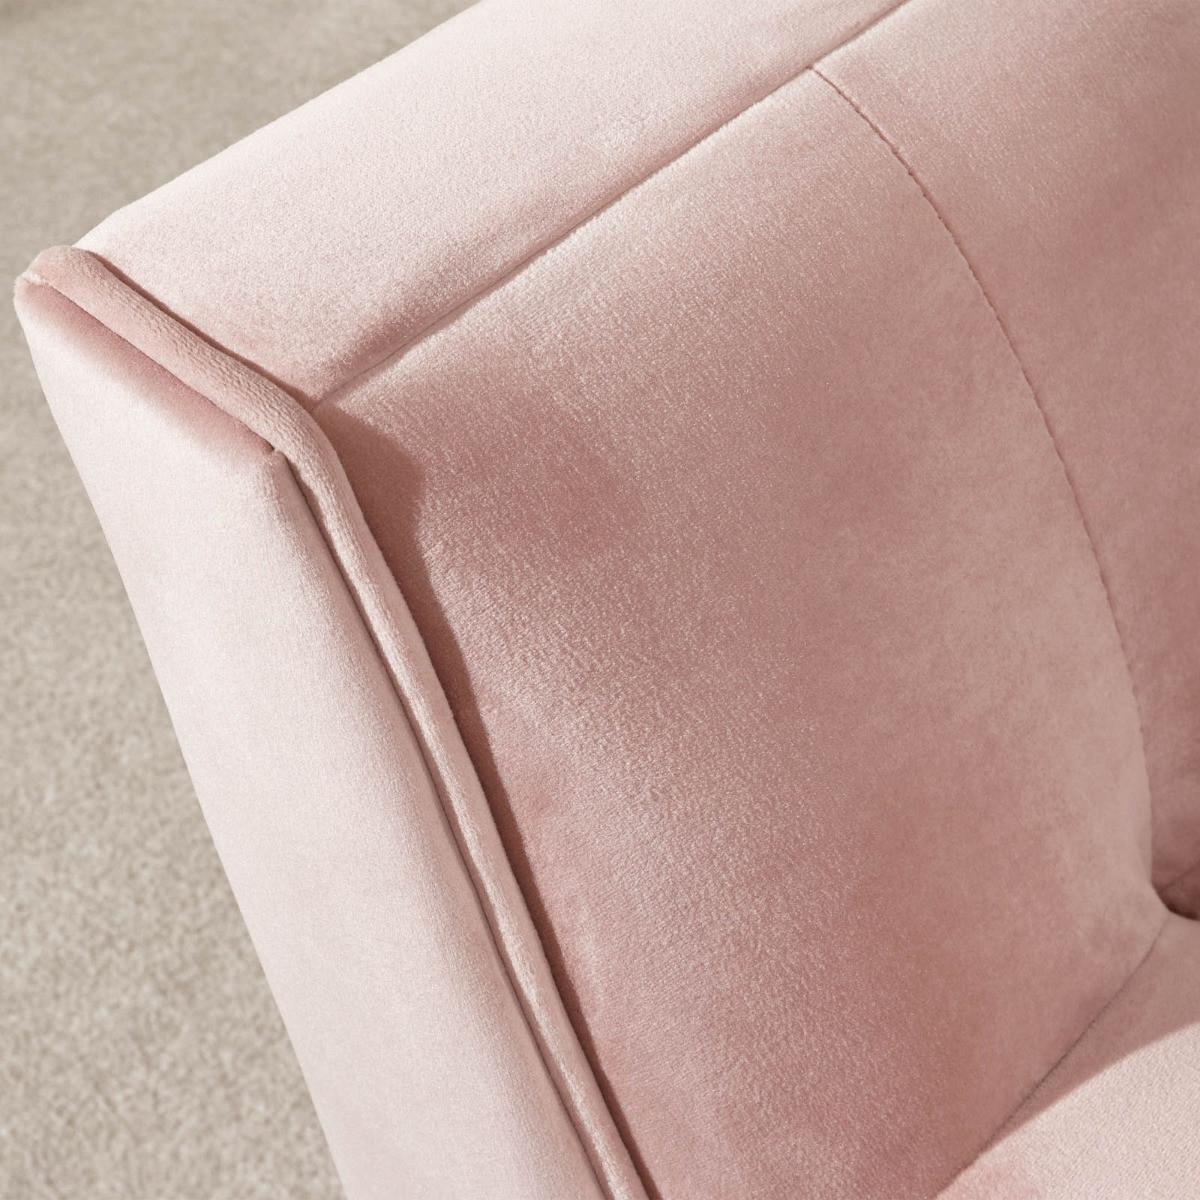 Turin Upholstered Window Seat - Blush Pink>